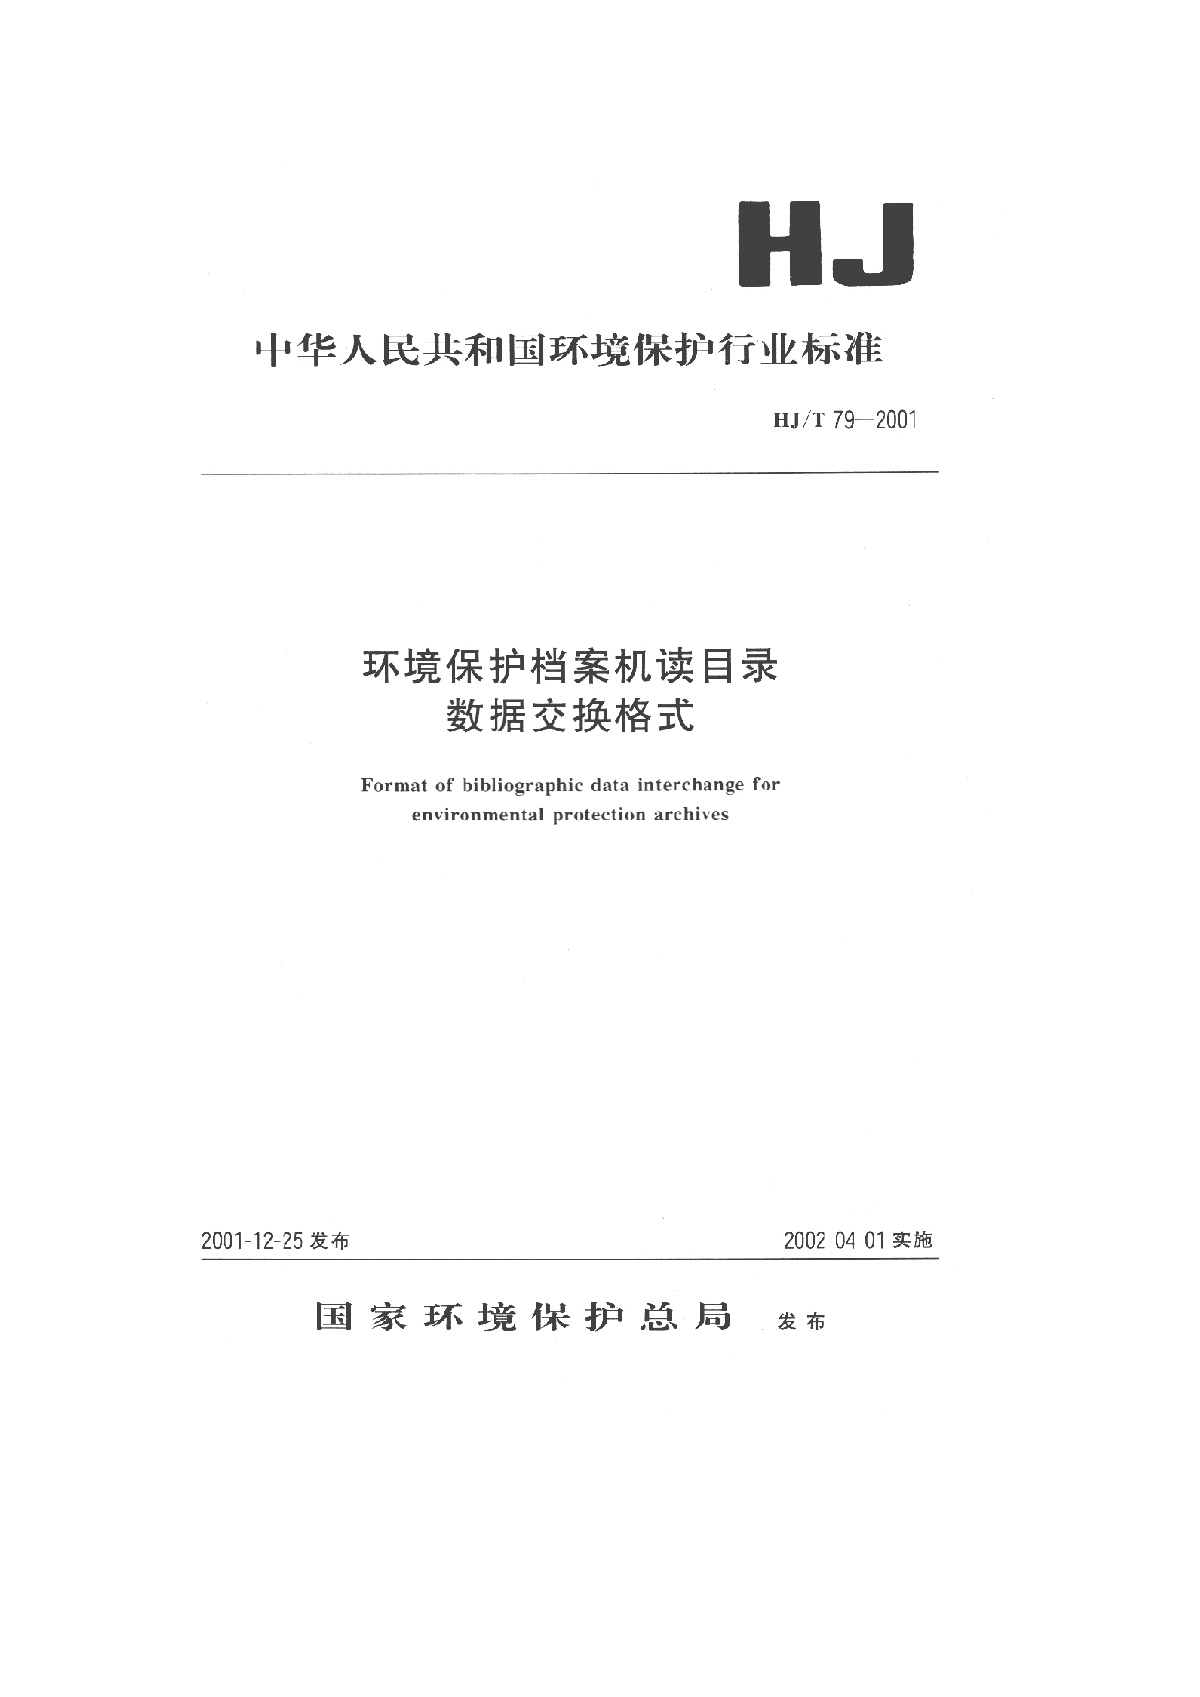 HJ_T 79-2001 环境保护档案机读目录数据交换格式